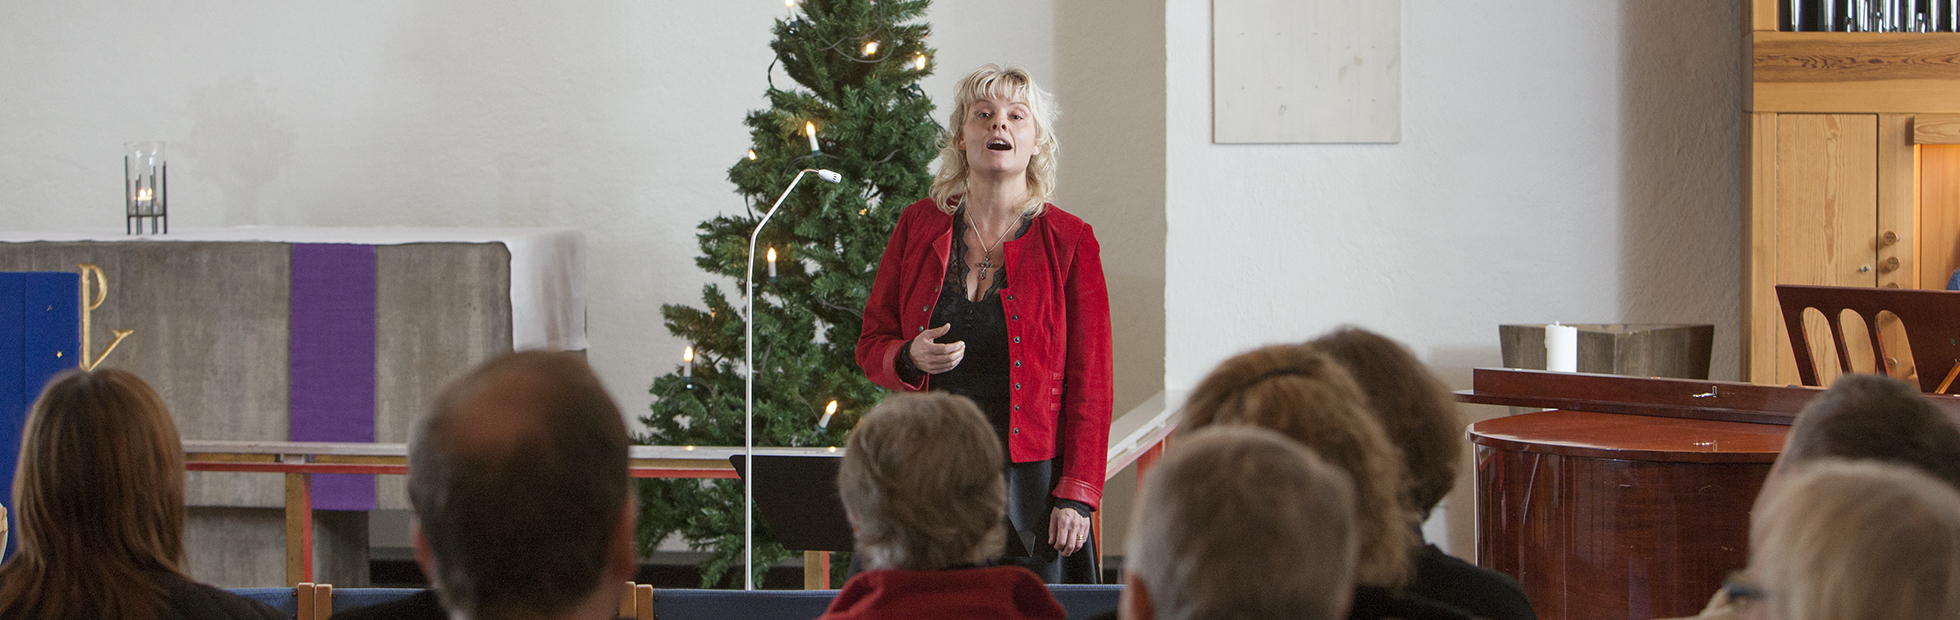 Christina Froh sjunger julsånger i Högåskyrkan i Tibro.